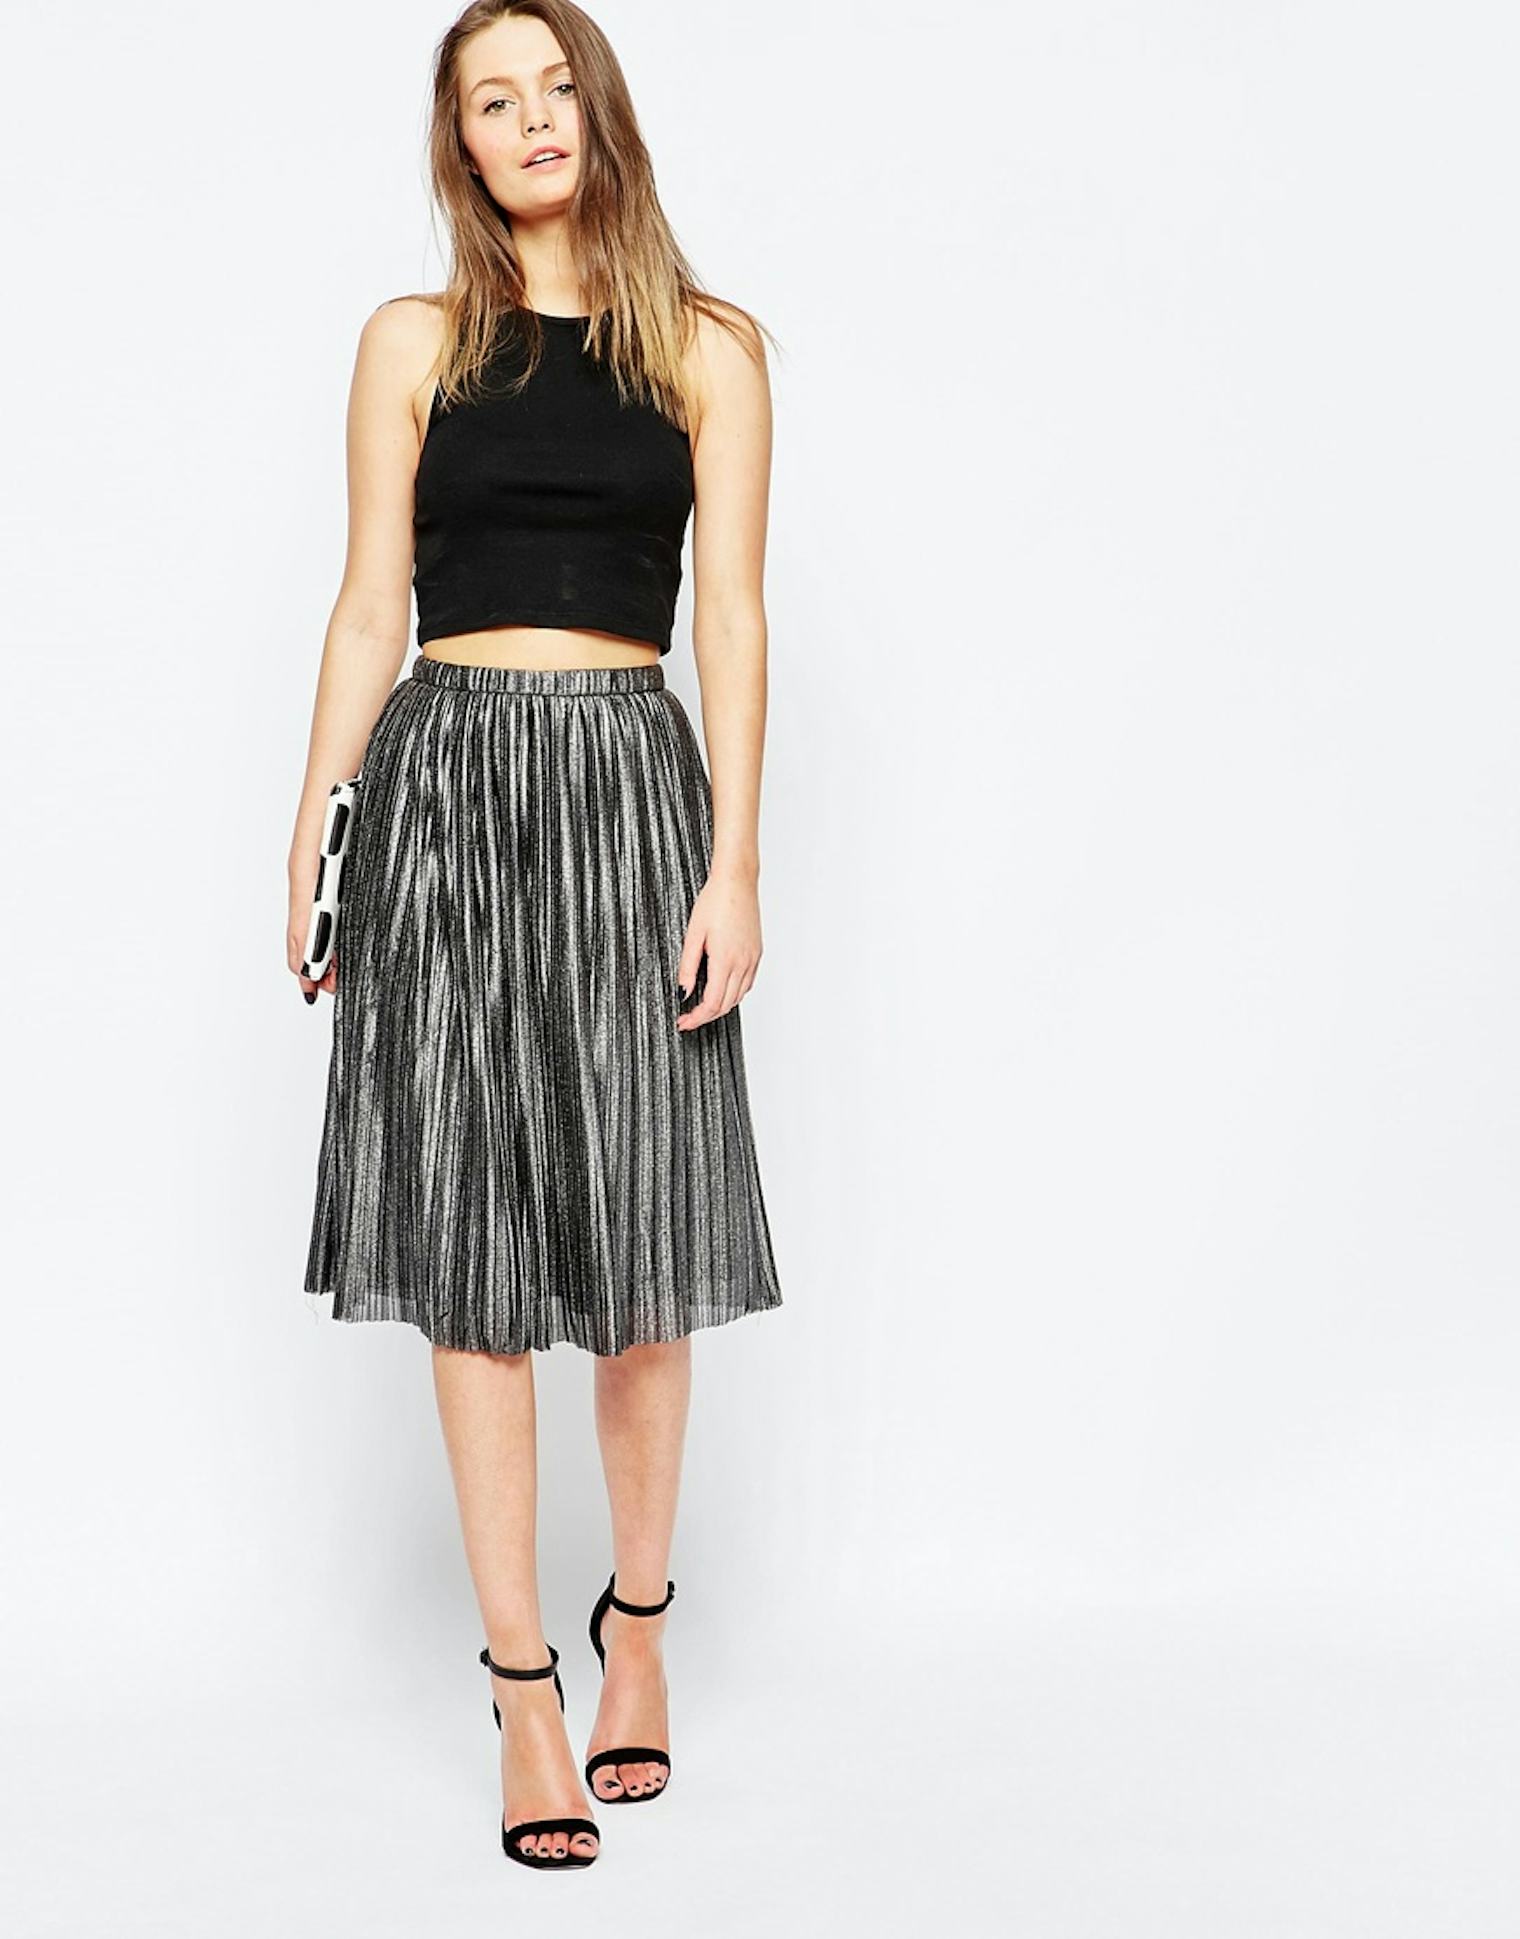 Wear A Metallic Skirt Like Alexa Chung This Fall — PHOTOS